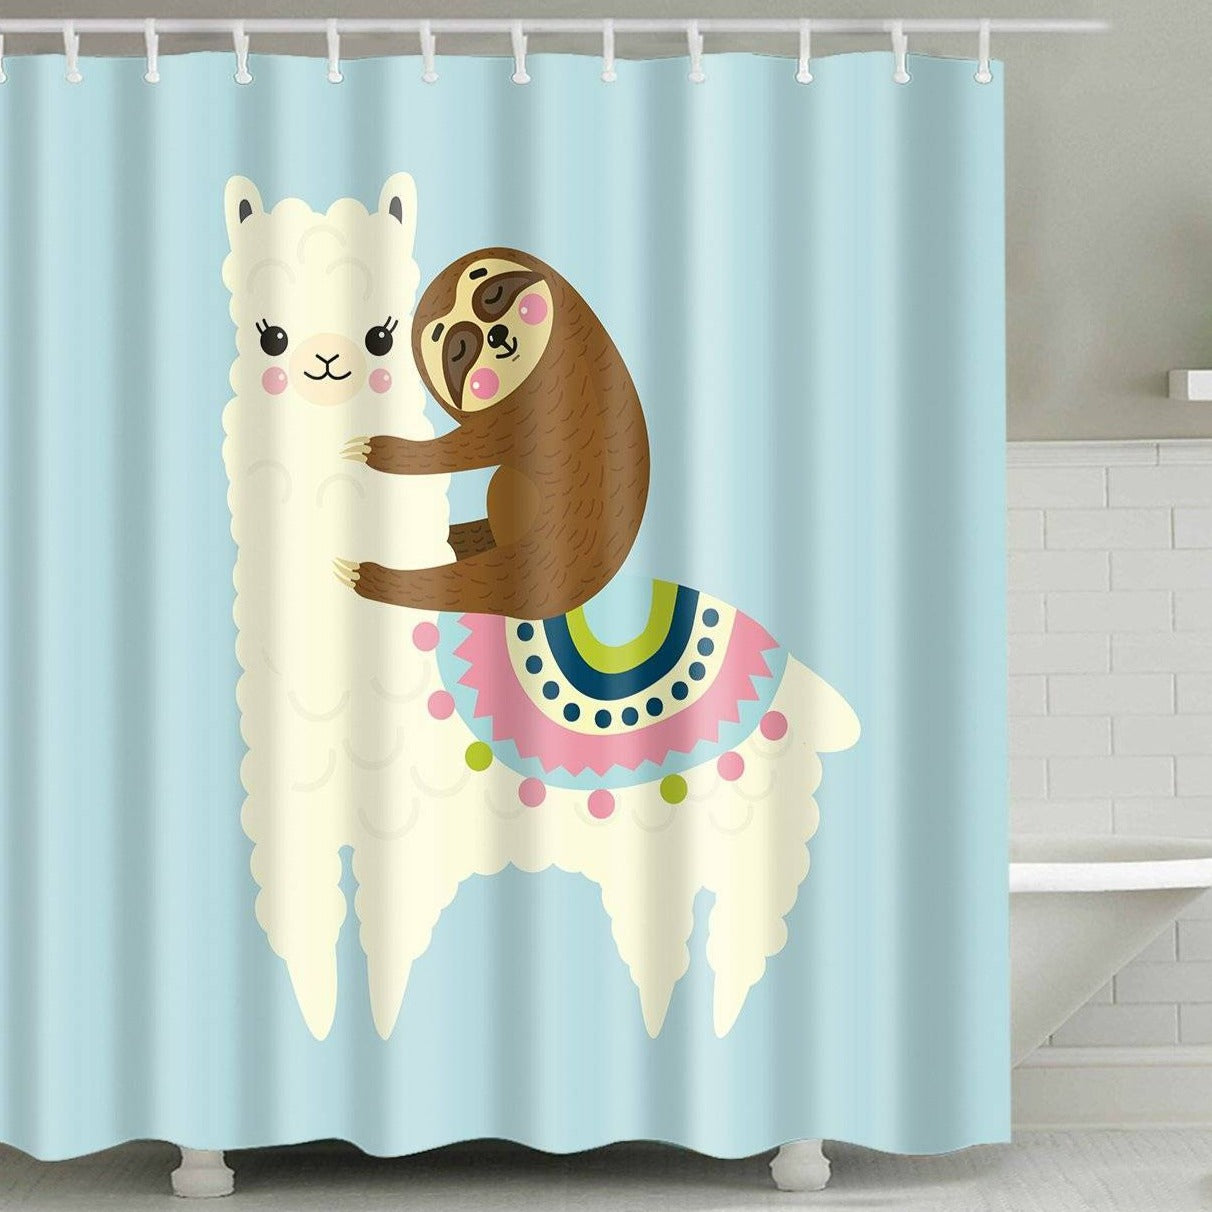 Cute Cartoon Animal Sloth Riding Llama Shower Curtain